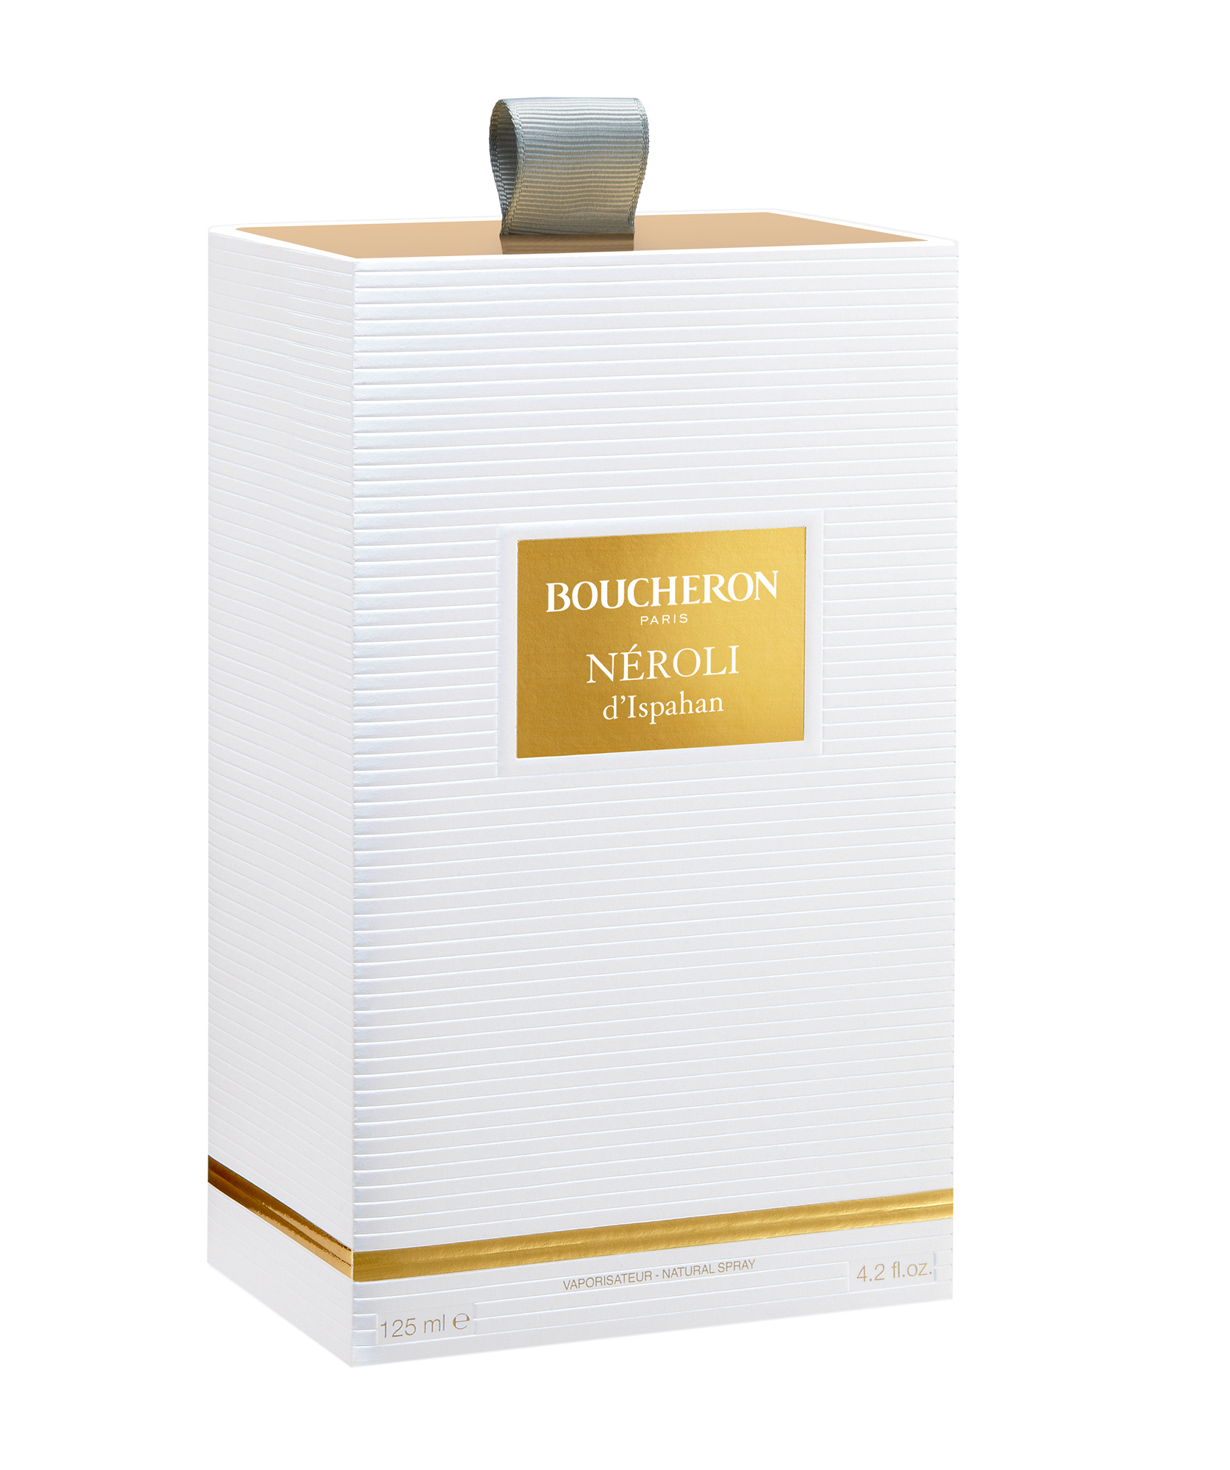 Perfume `Boucheron` Nerolid`Ispahan, 125 ml